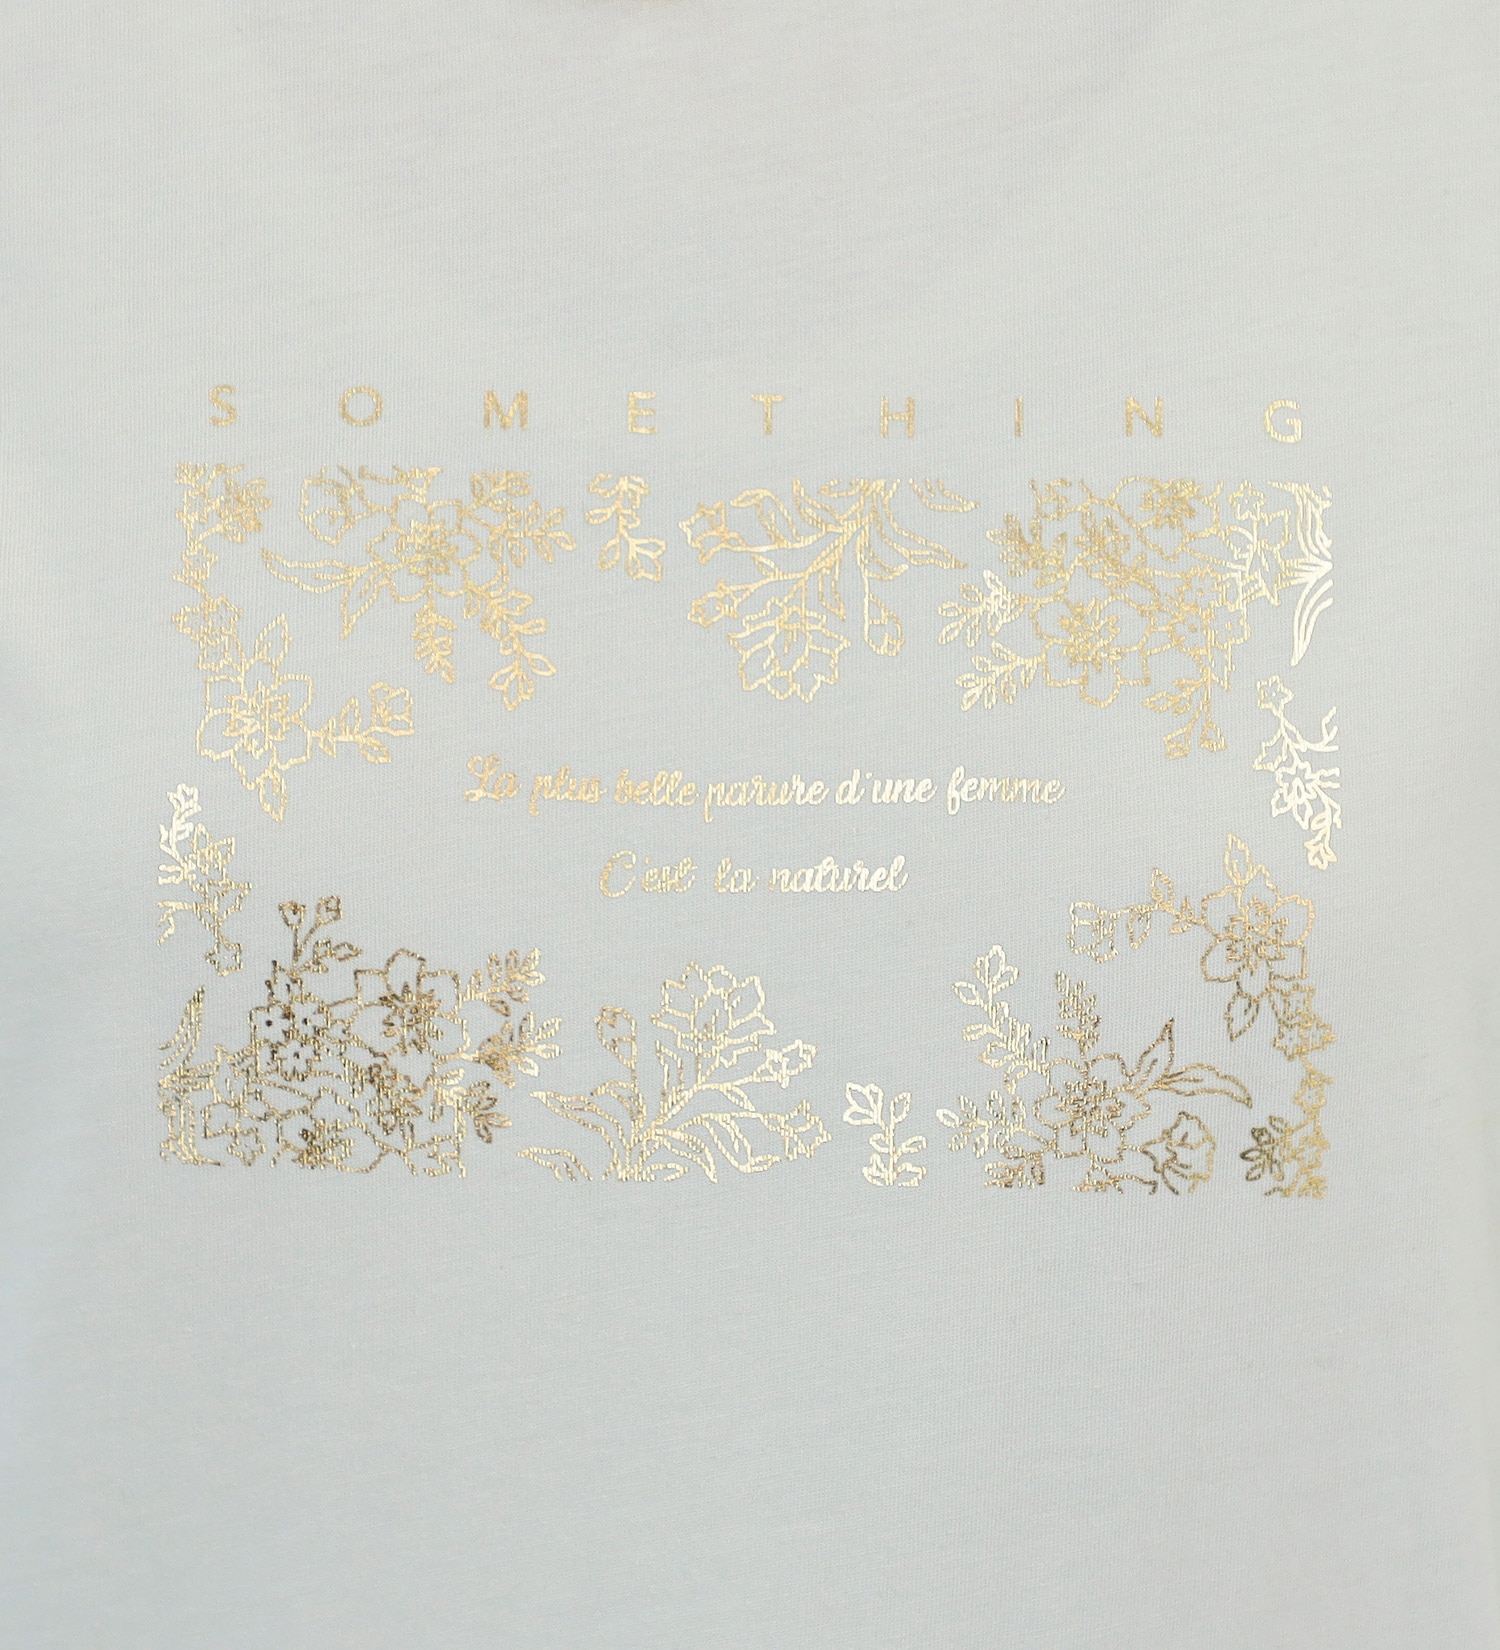 SOMETHING(サムシング)のSOMETHING フォイルプリントTシャツ【長袖】|トップス/Tシャツ/カットソー/レディース|アイボリー